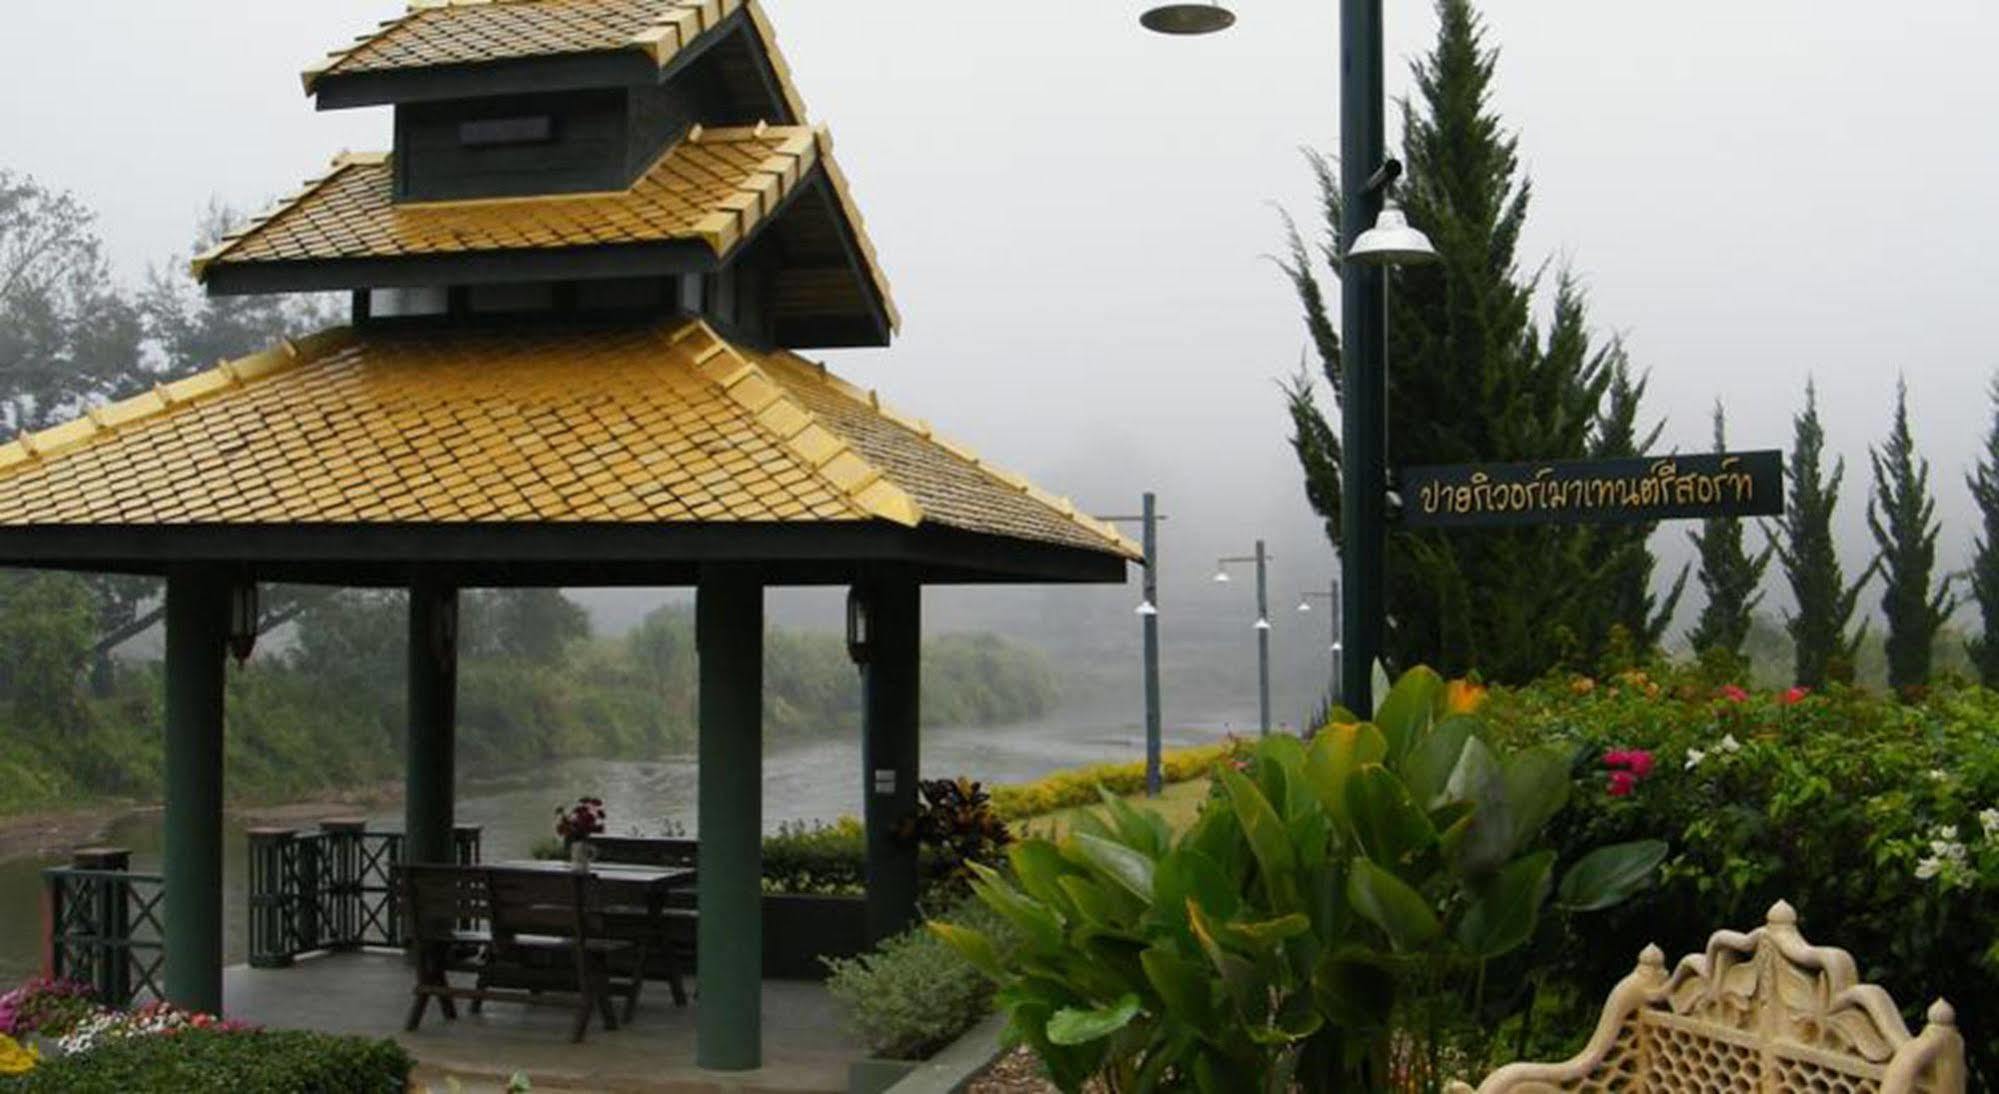 Pai River Mountain Resort Exteriér fotografie